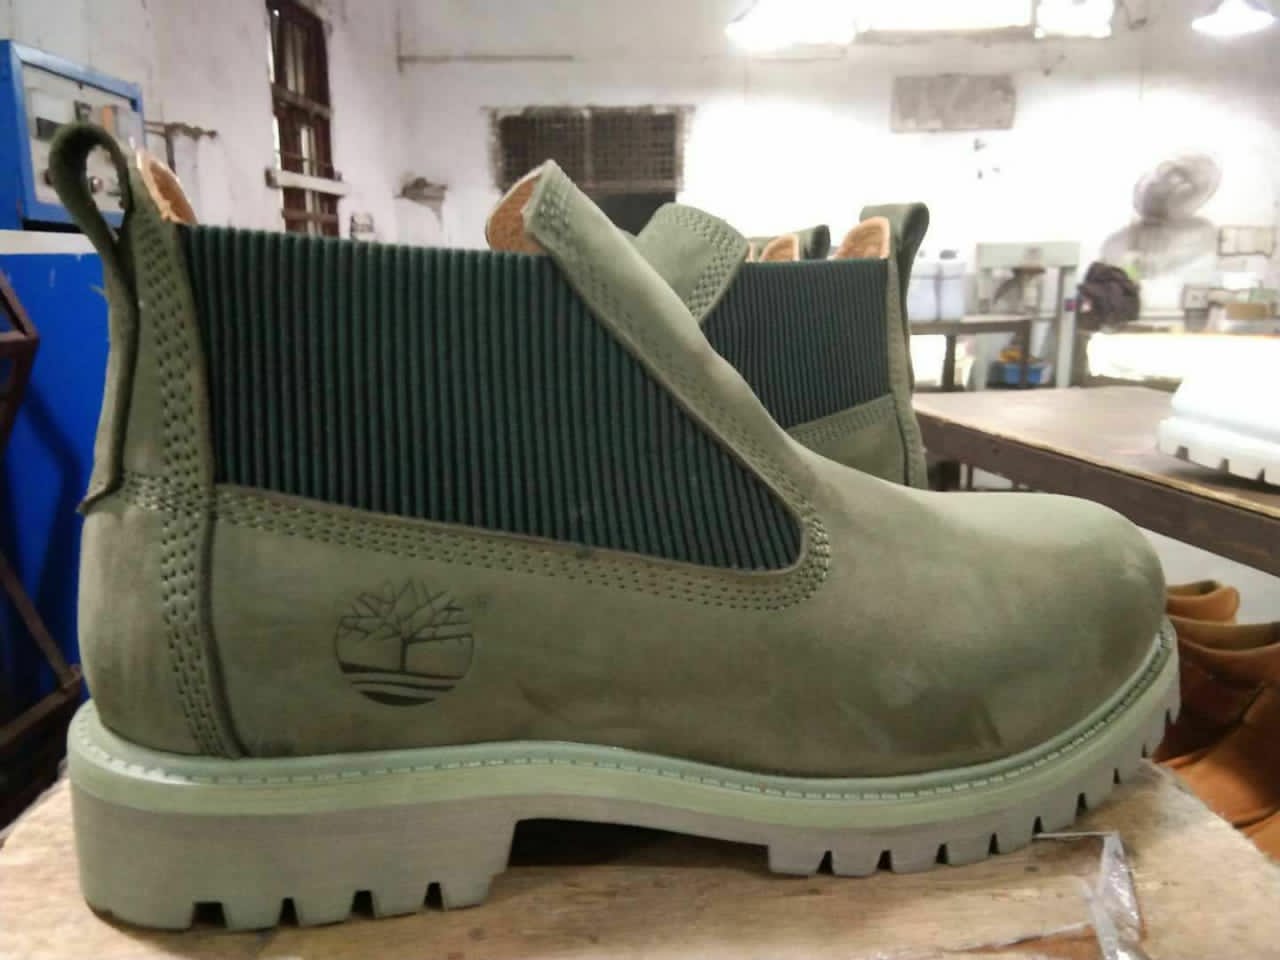 Uitsteken Elk jaar Voorbijgaand Ted Bright on Twitter: "New arrivals in stock 💥 Timberland boots Sizes 39- 45 Price Ksh 4000 Grab yours, delivery countrywide 📞0795351862 Mombasa  road Raila Odinga https://t.co/Cax6B2DpTf" / Twitter